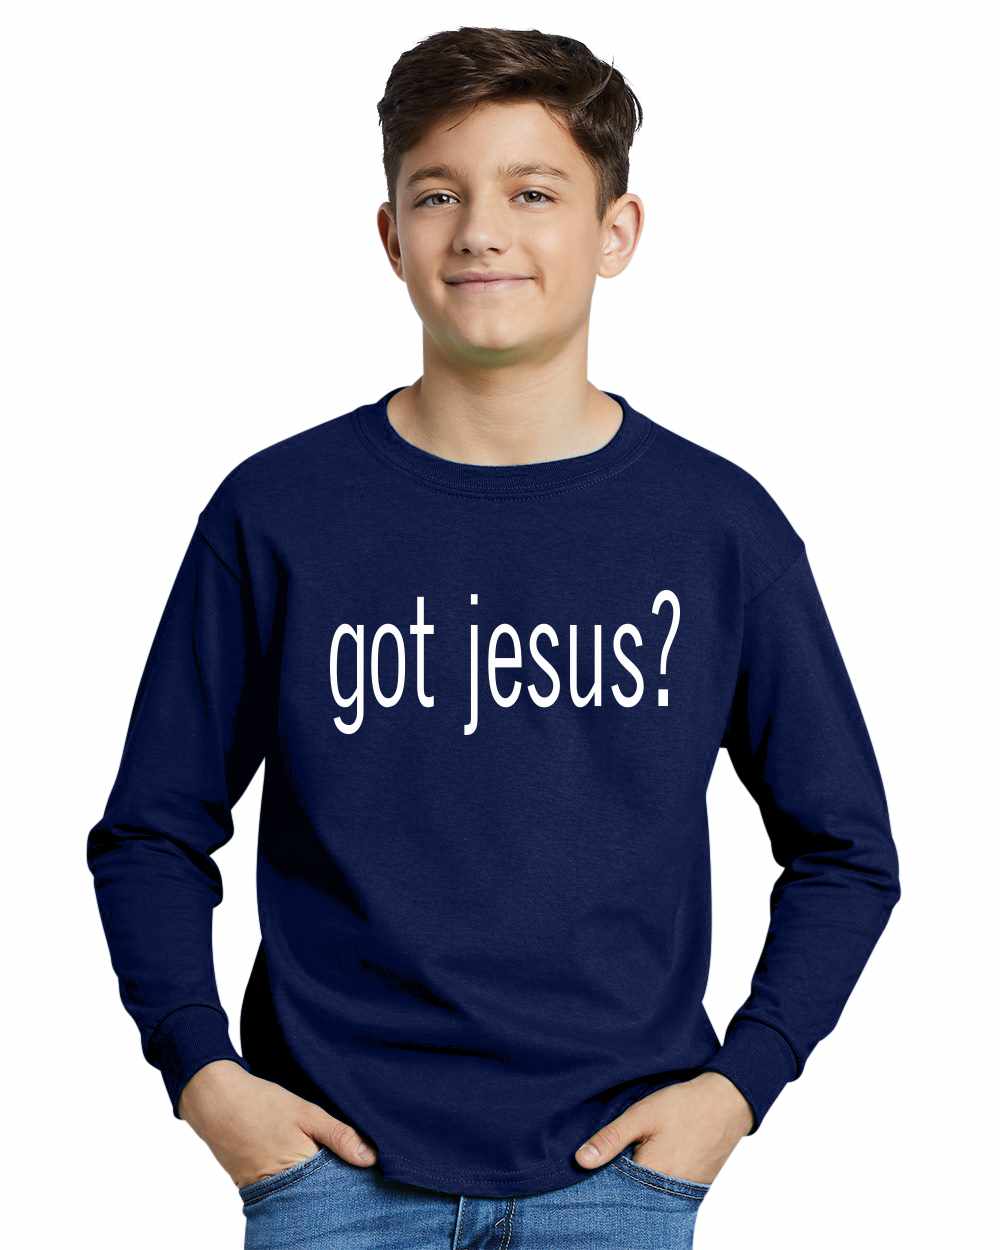 Got Jesus on Youth Long Sleeve Shirt